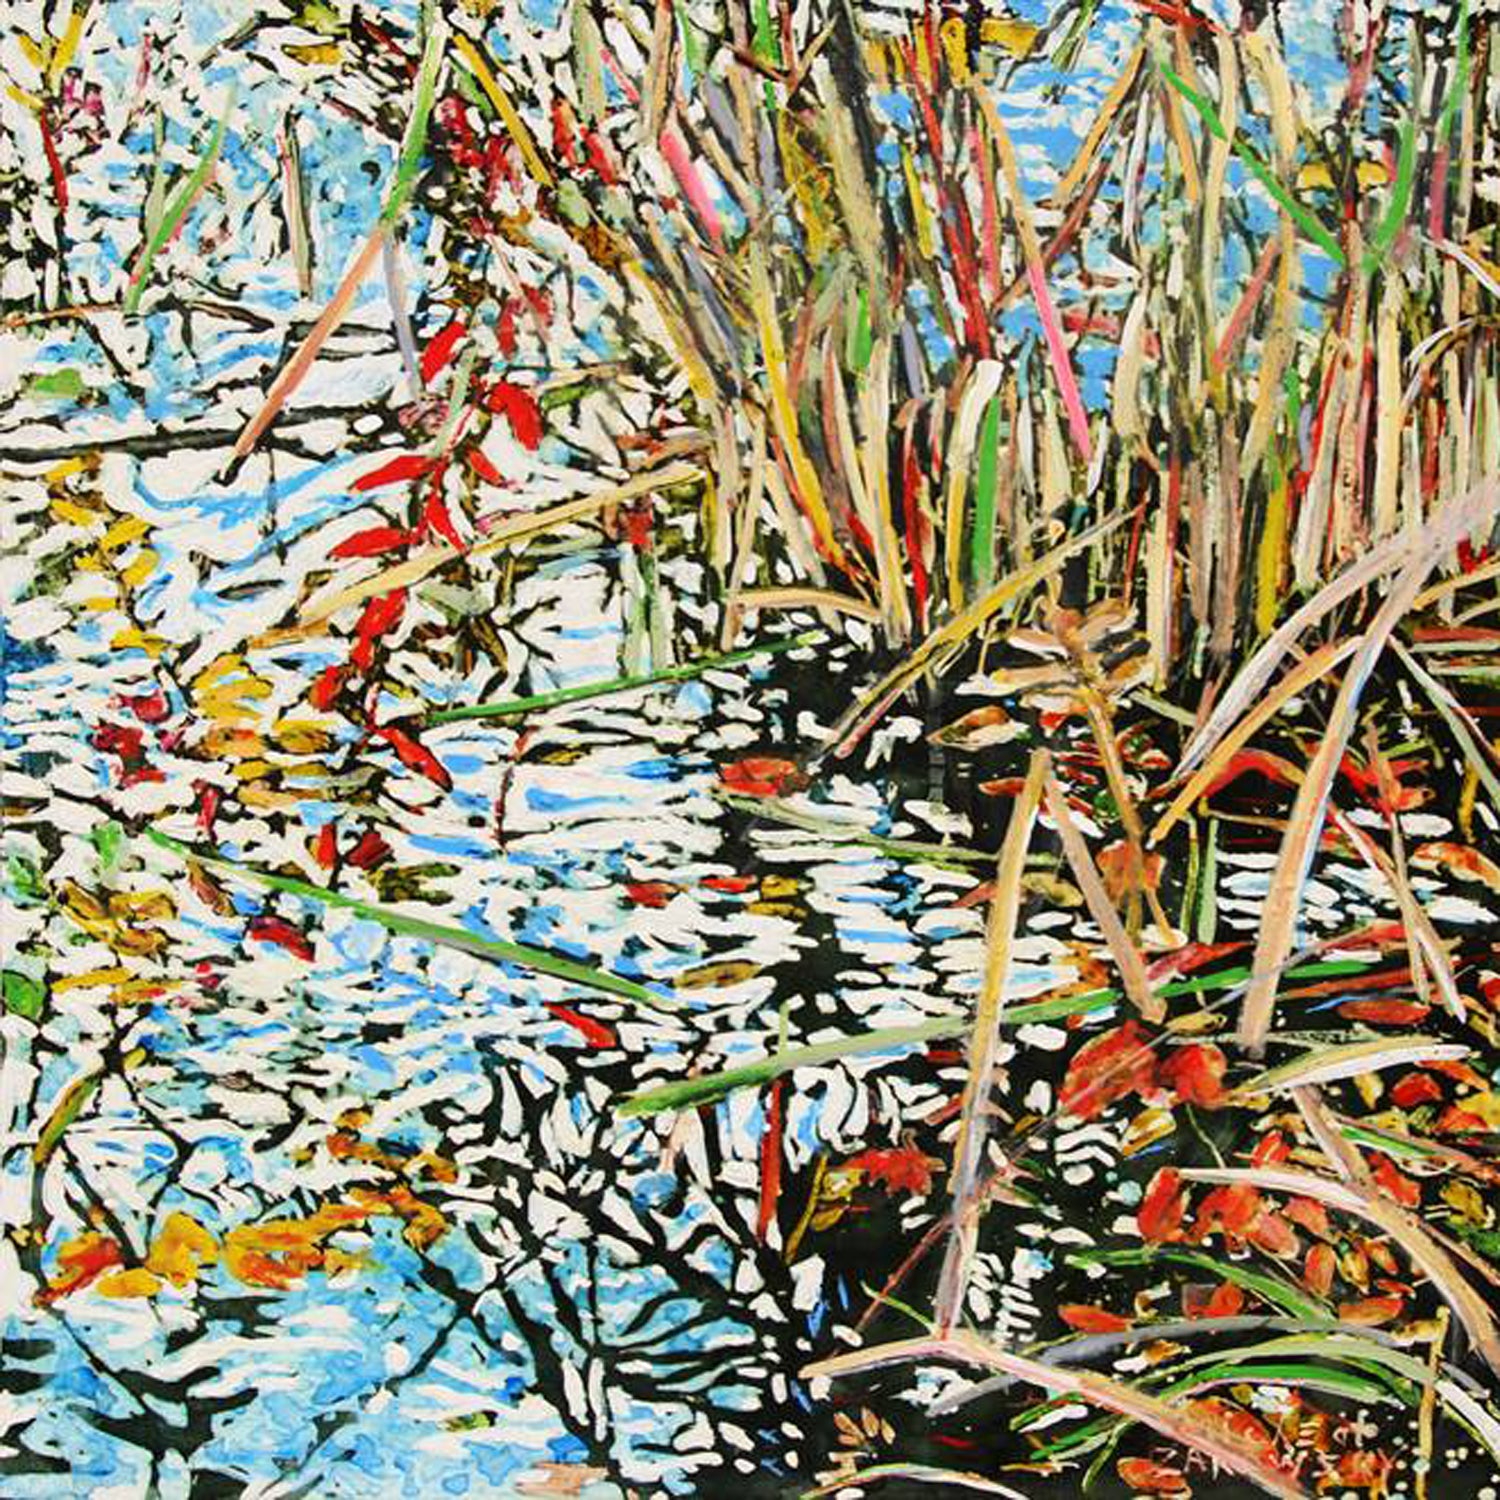 Micheal Zarowsky - Autumn pond gull river 18x18